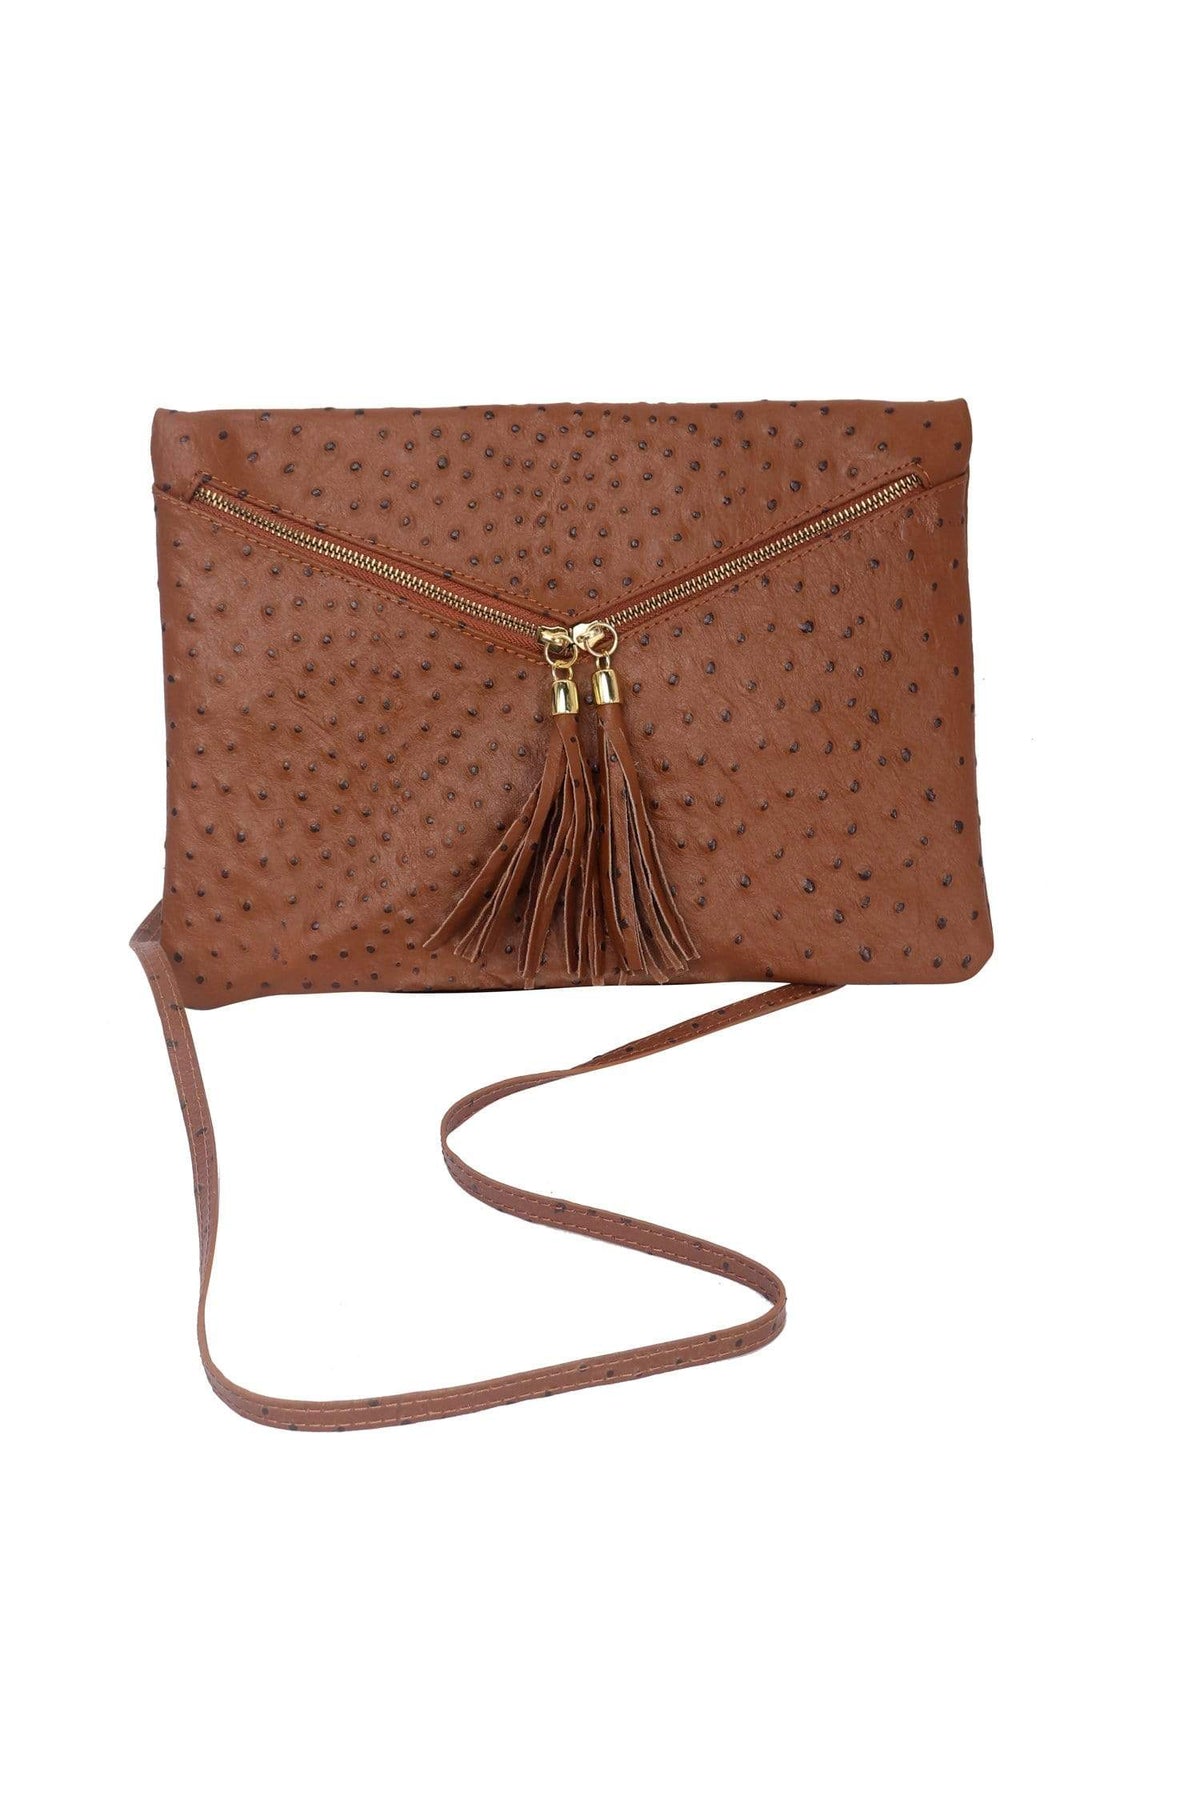 Andrea Champagne Emboss Belt Bag I Leather Handbags I Shop Sofia ...